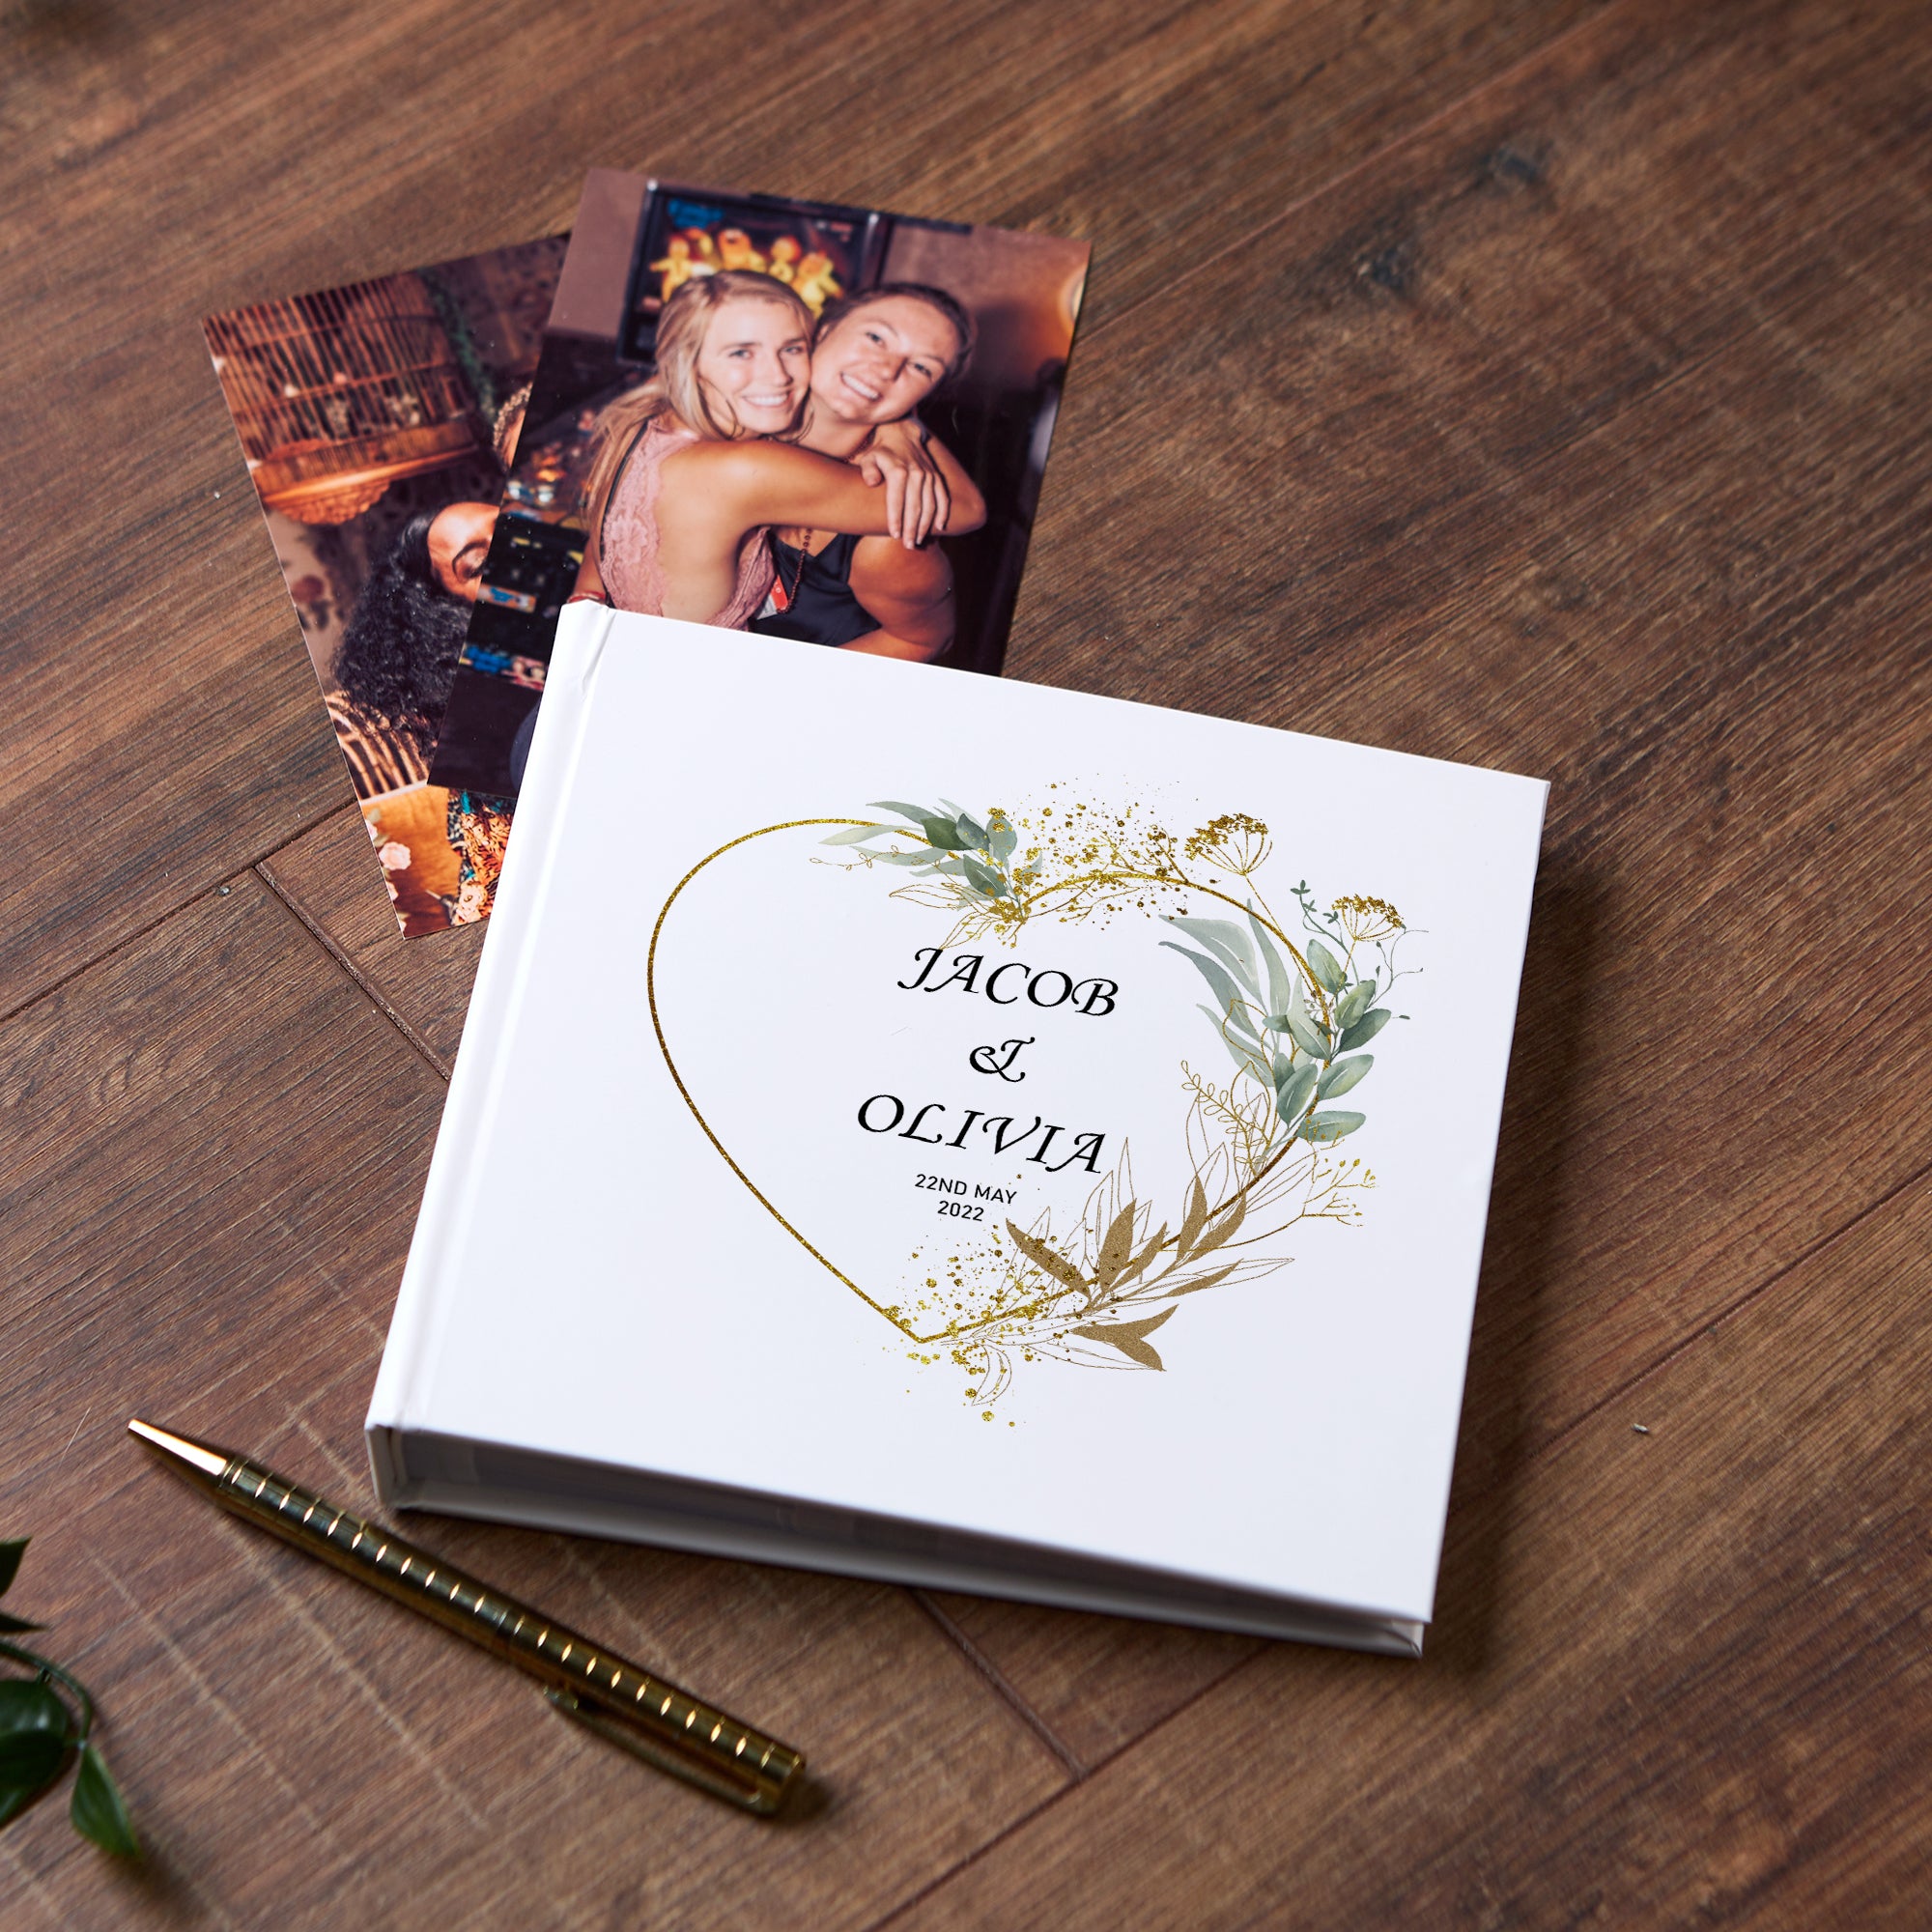 Personalised Wedding Photo Album Gift Gold Green Wreath Heart